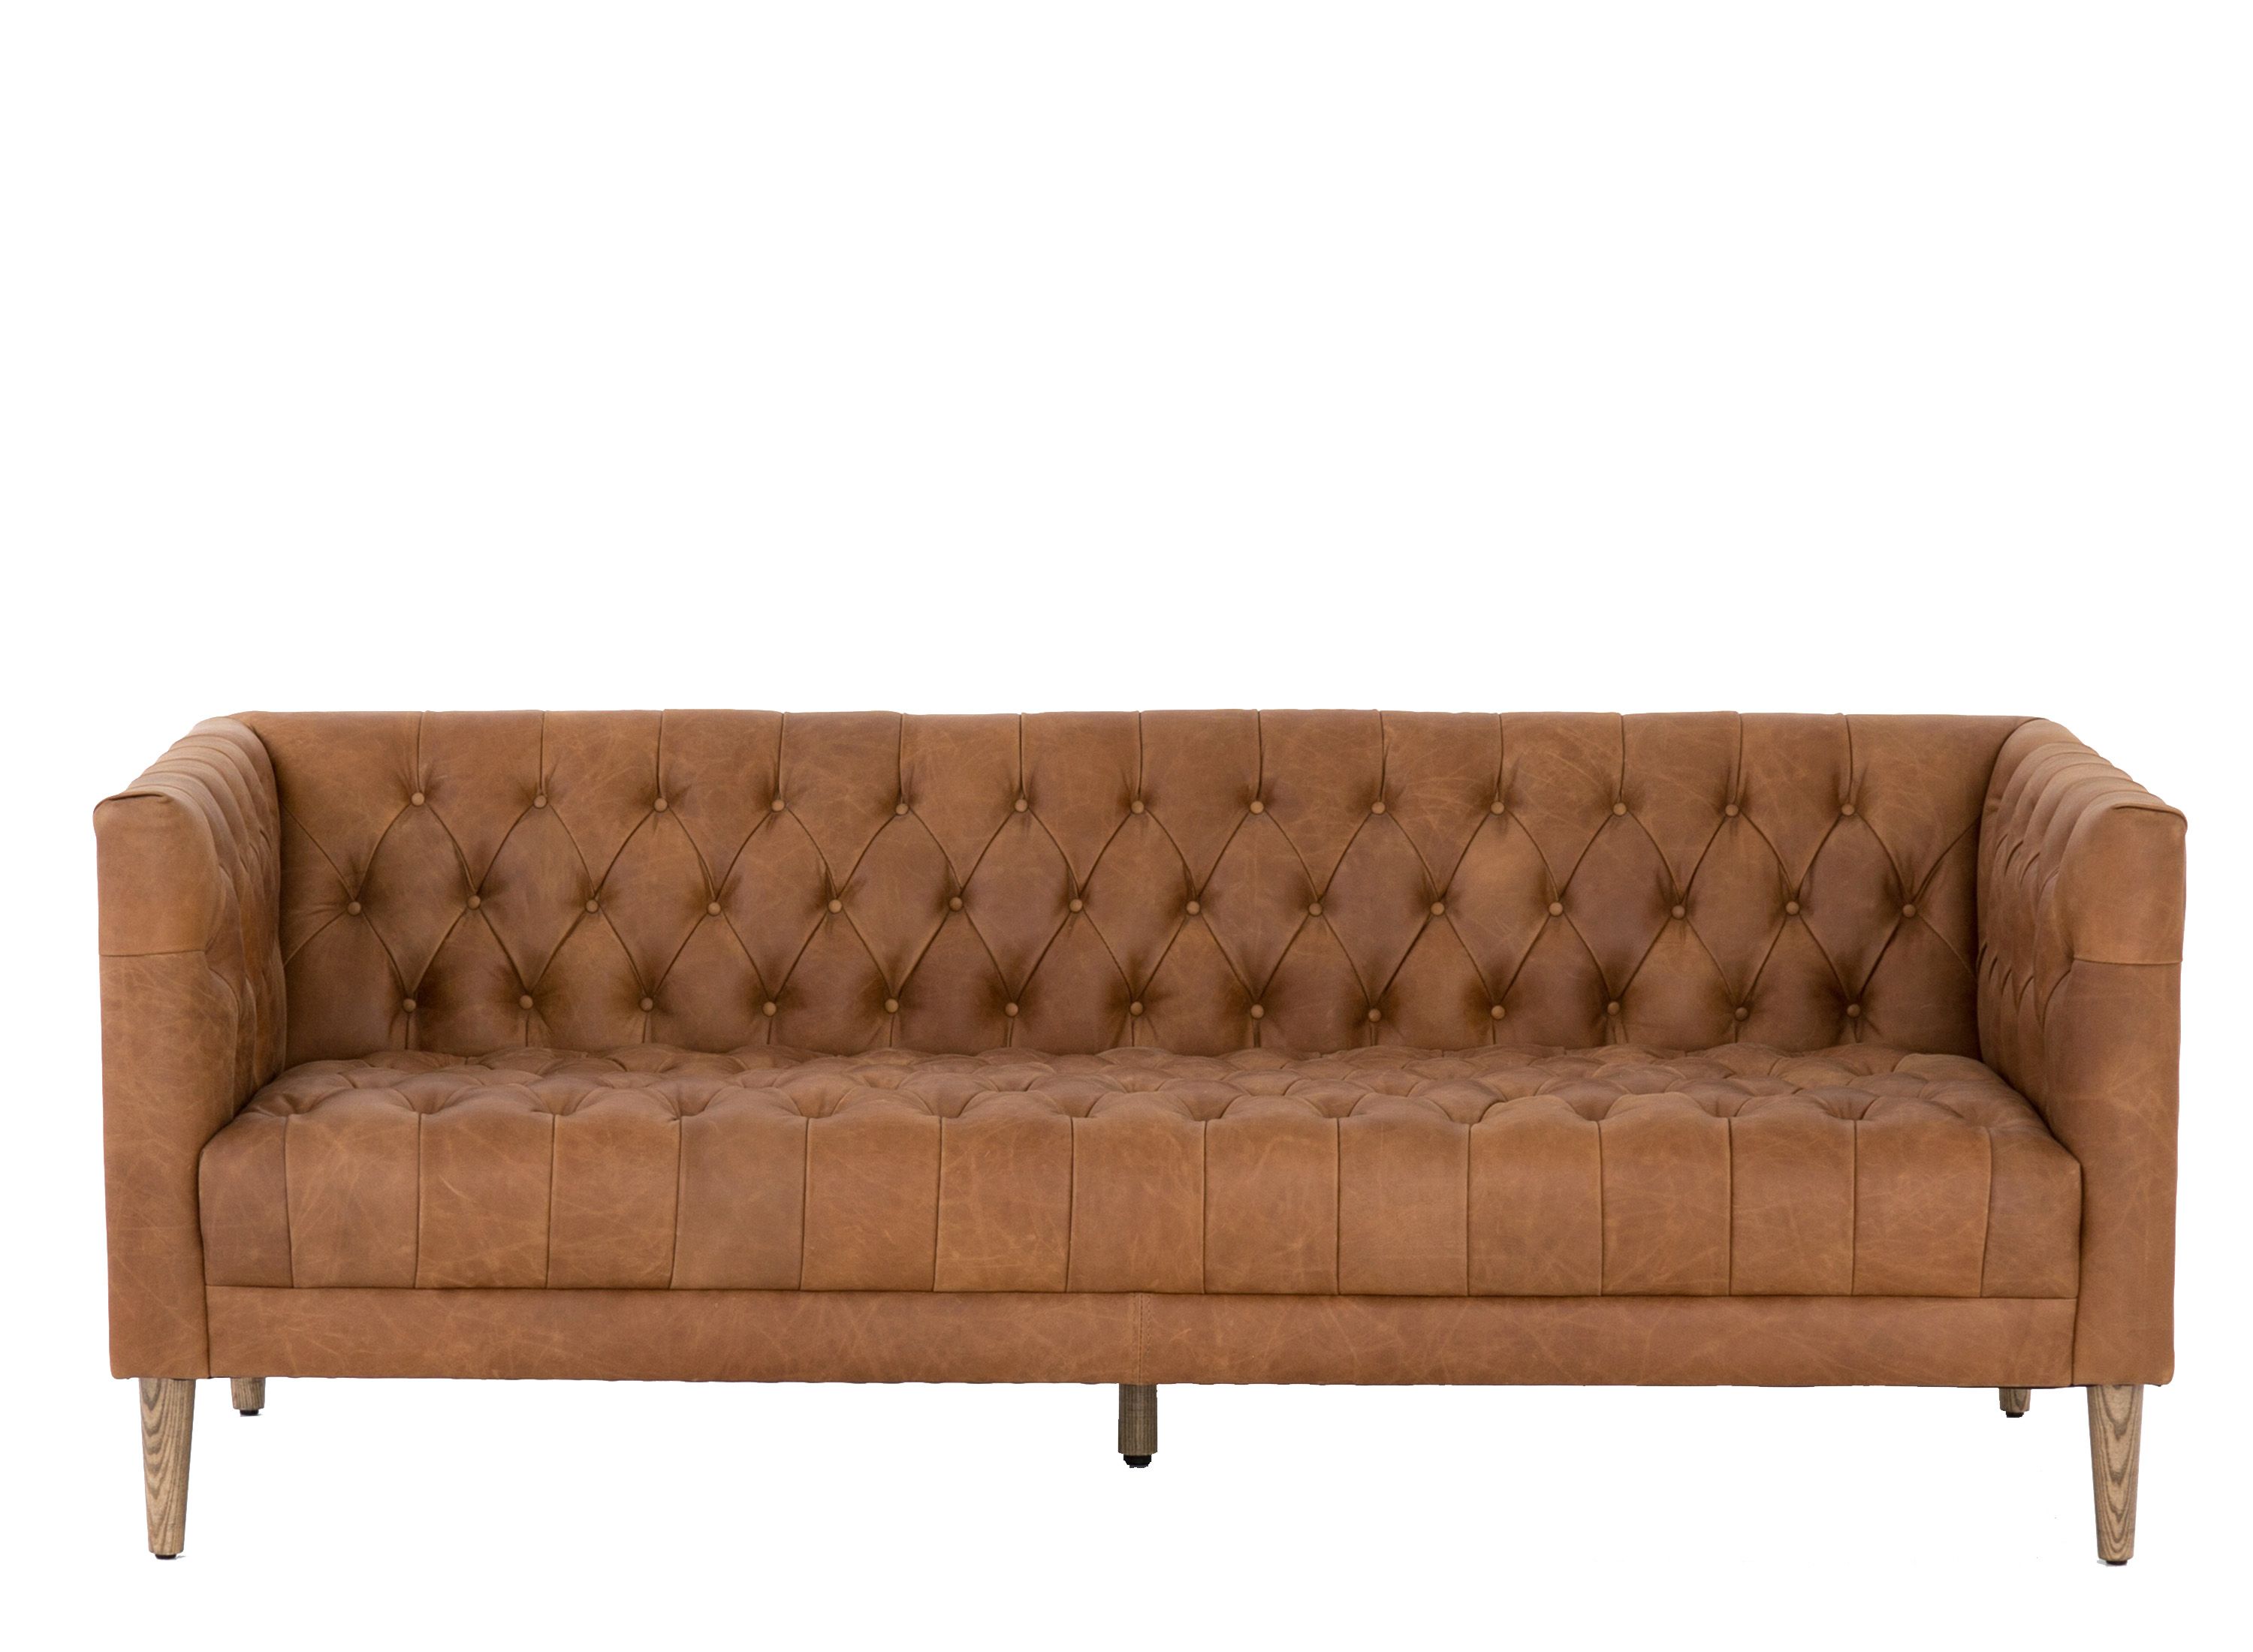 Welkin Leather Sofa | Raymour & Flanigan